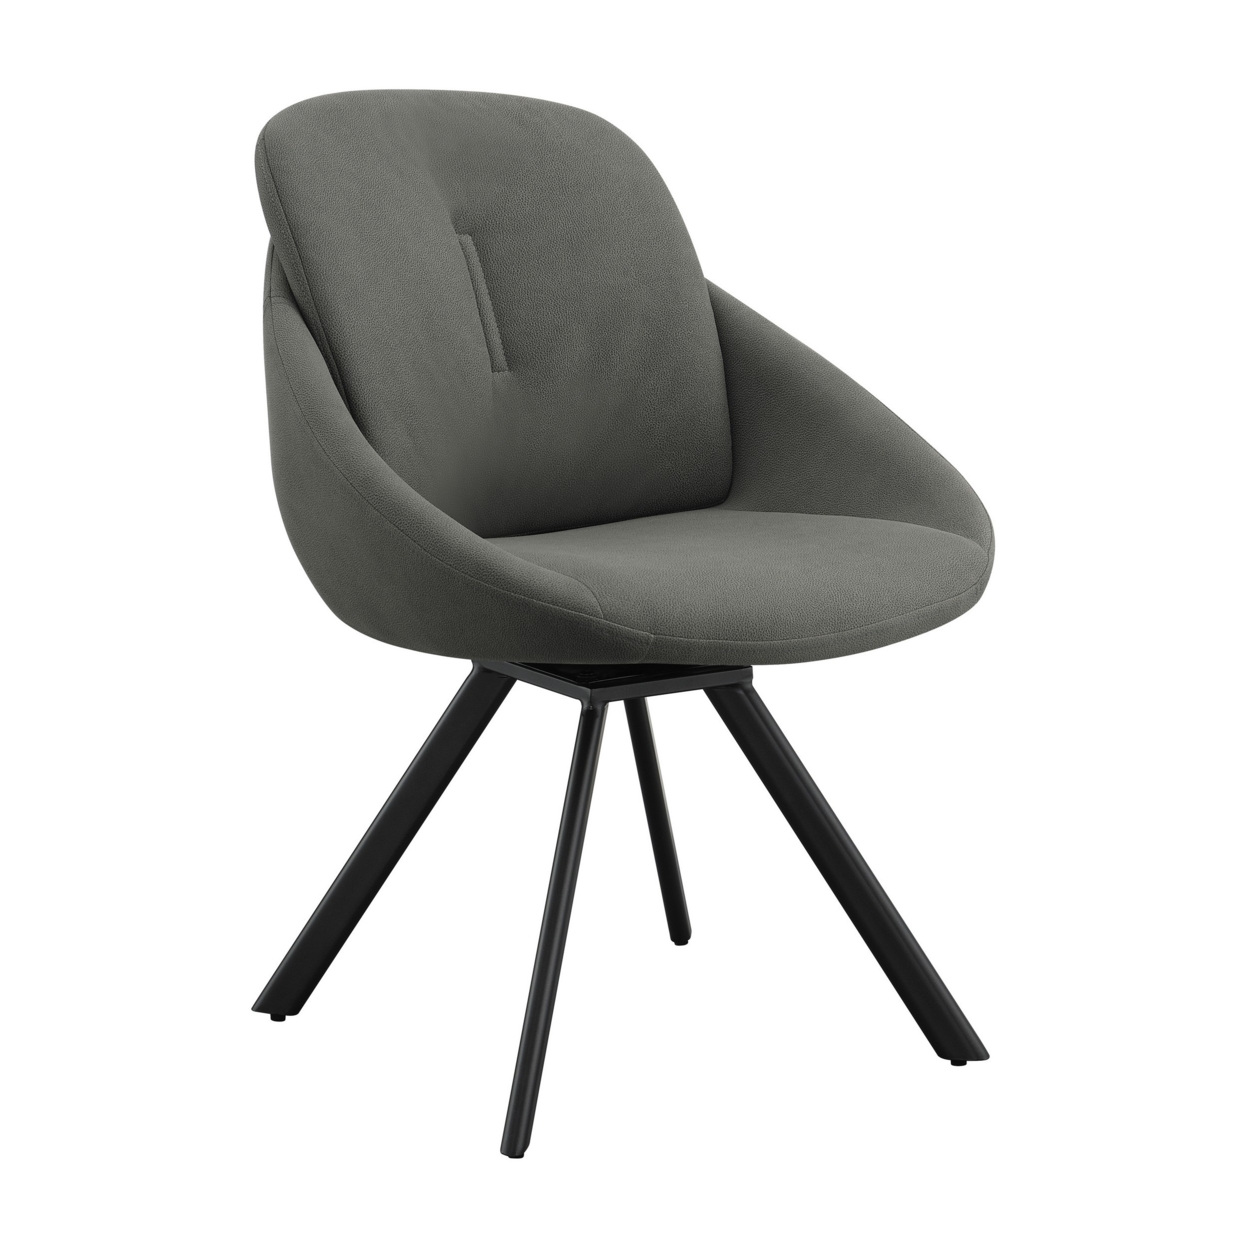 Kea 23 Inch Side Chair, Set Of 2, Swivel Seat, Dark Gray Fabric Upholstery- Saltoro Sherpi